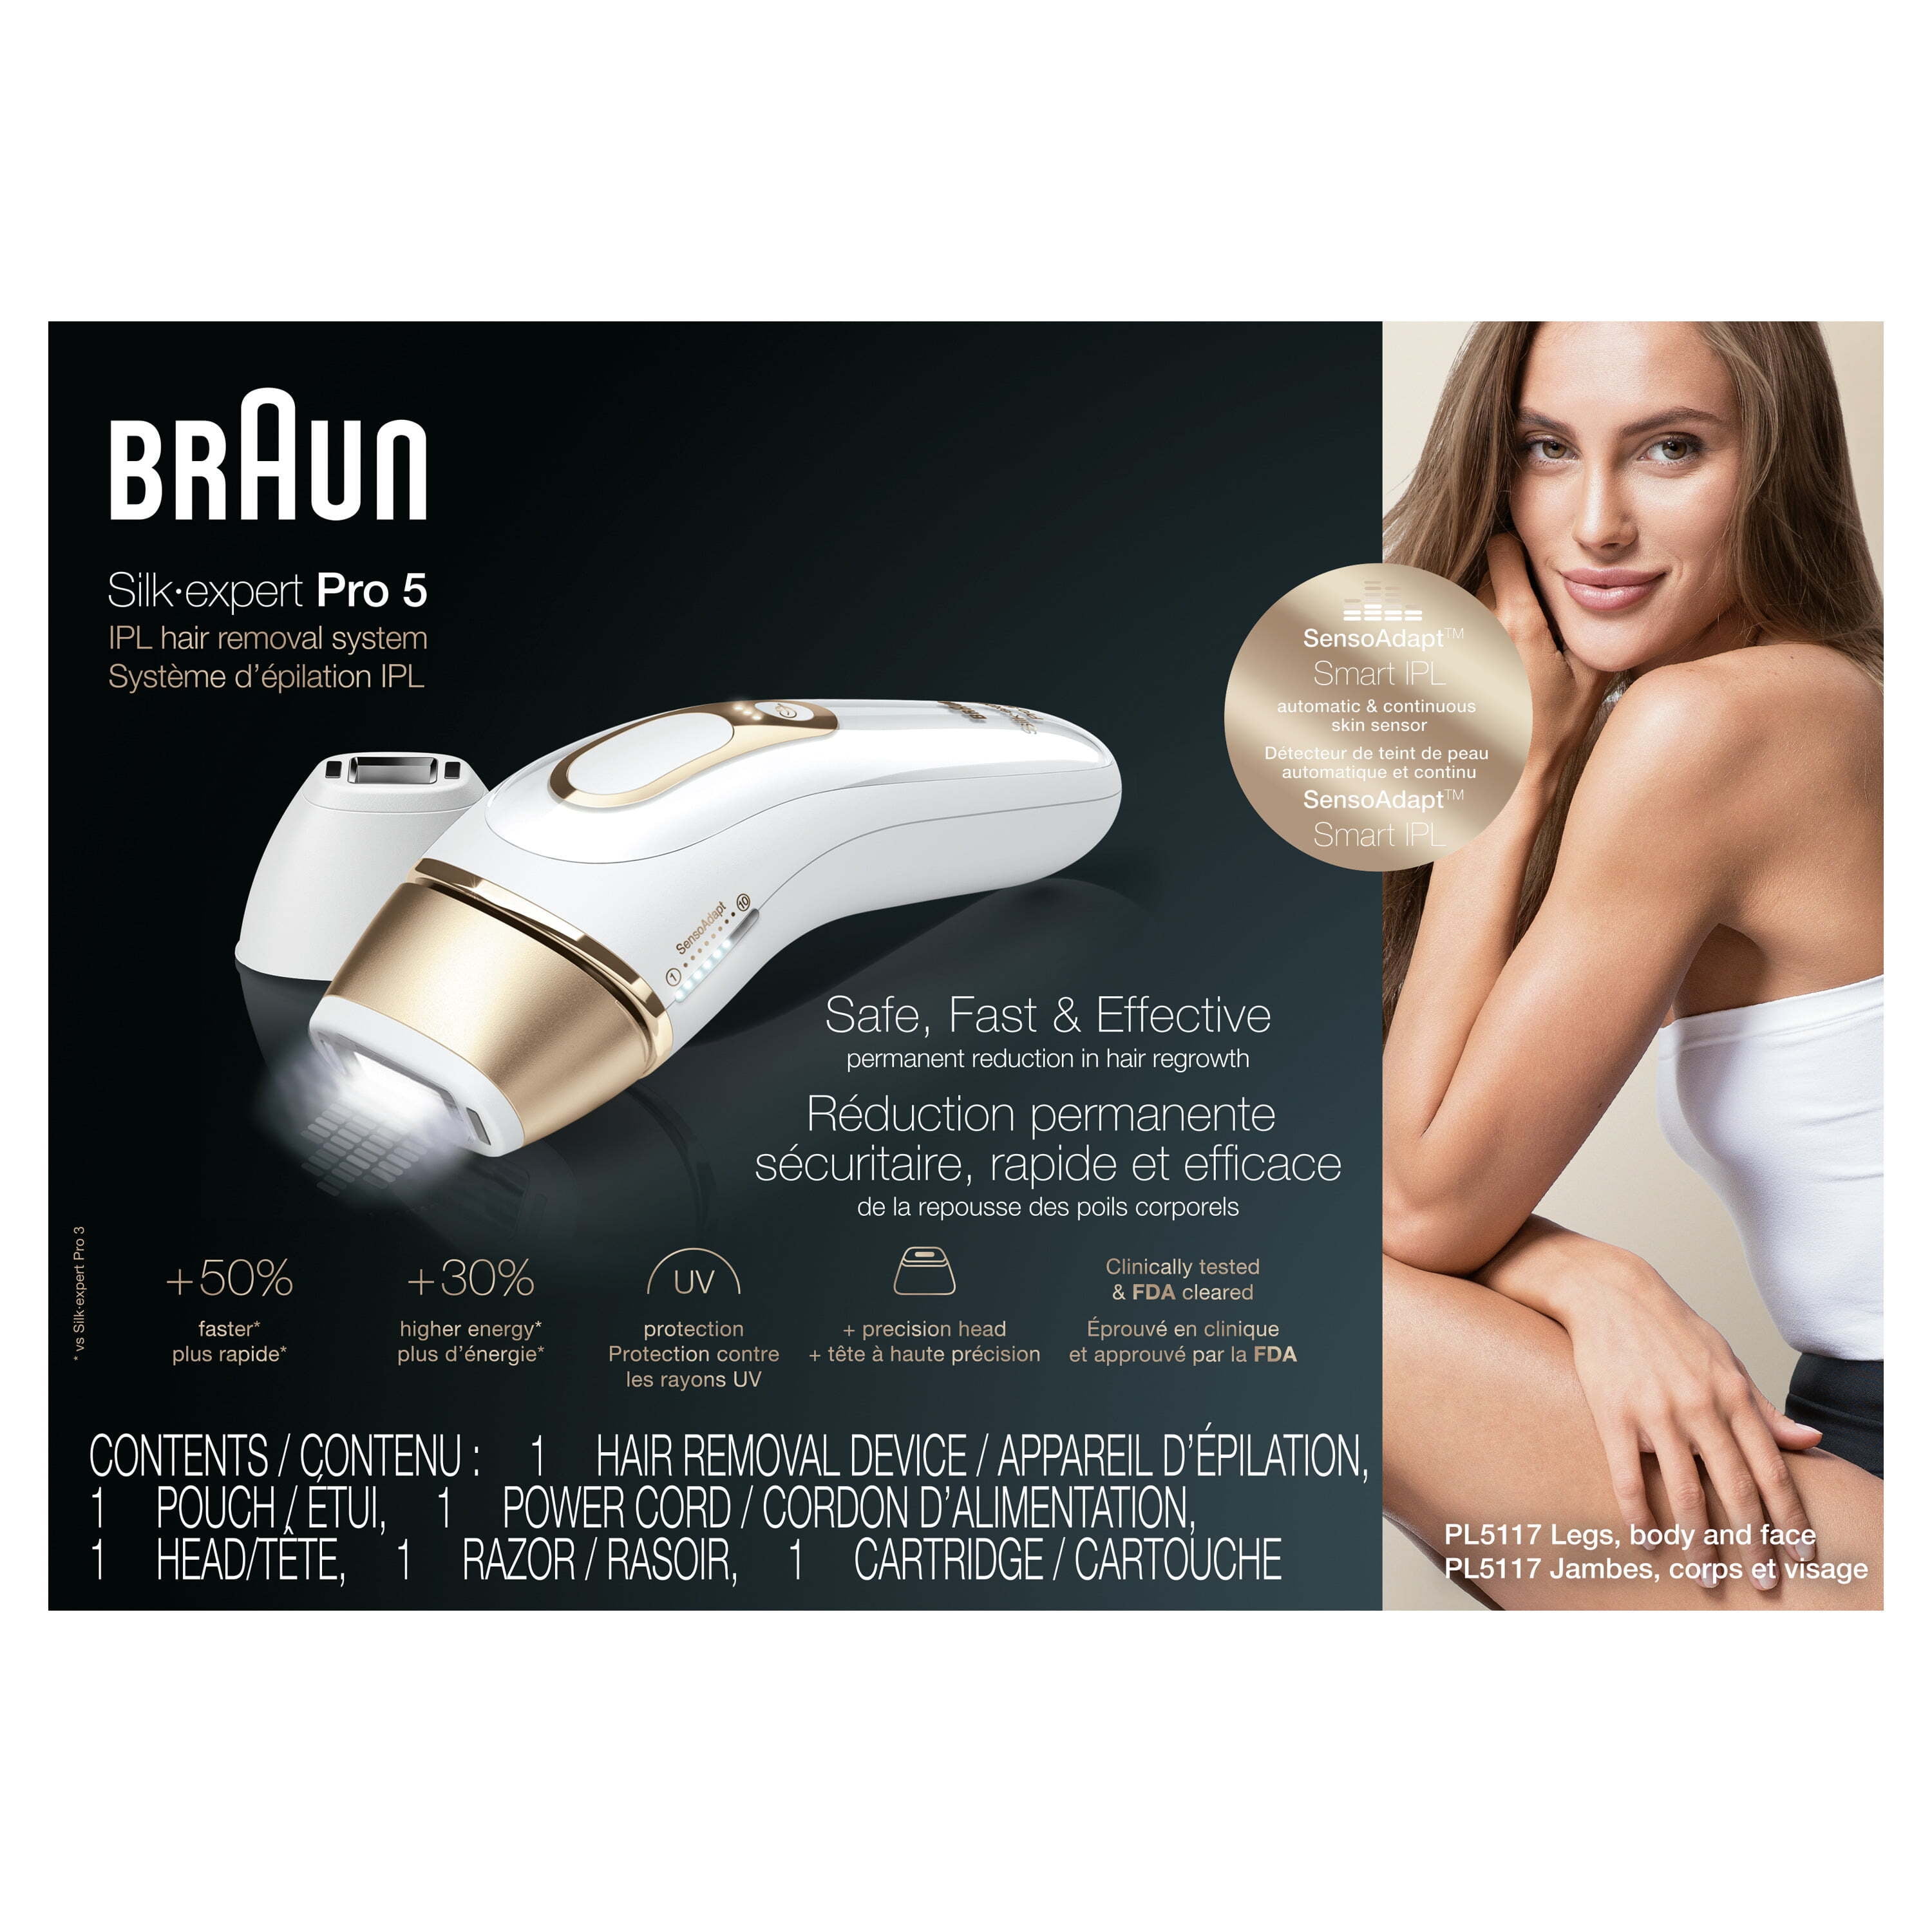 Braun Silk·expert Pro 5 PL5117 Latest Generation IPL, Permanent